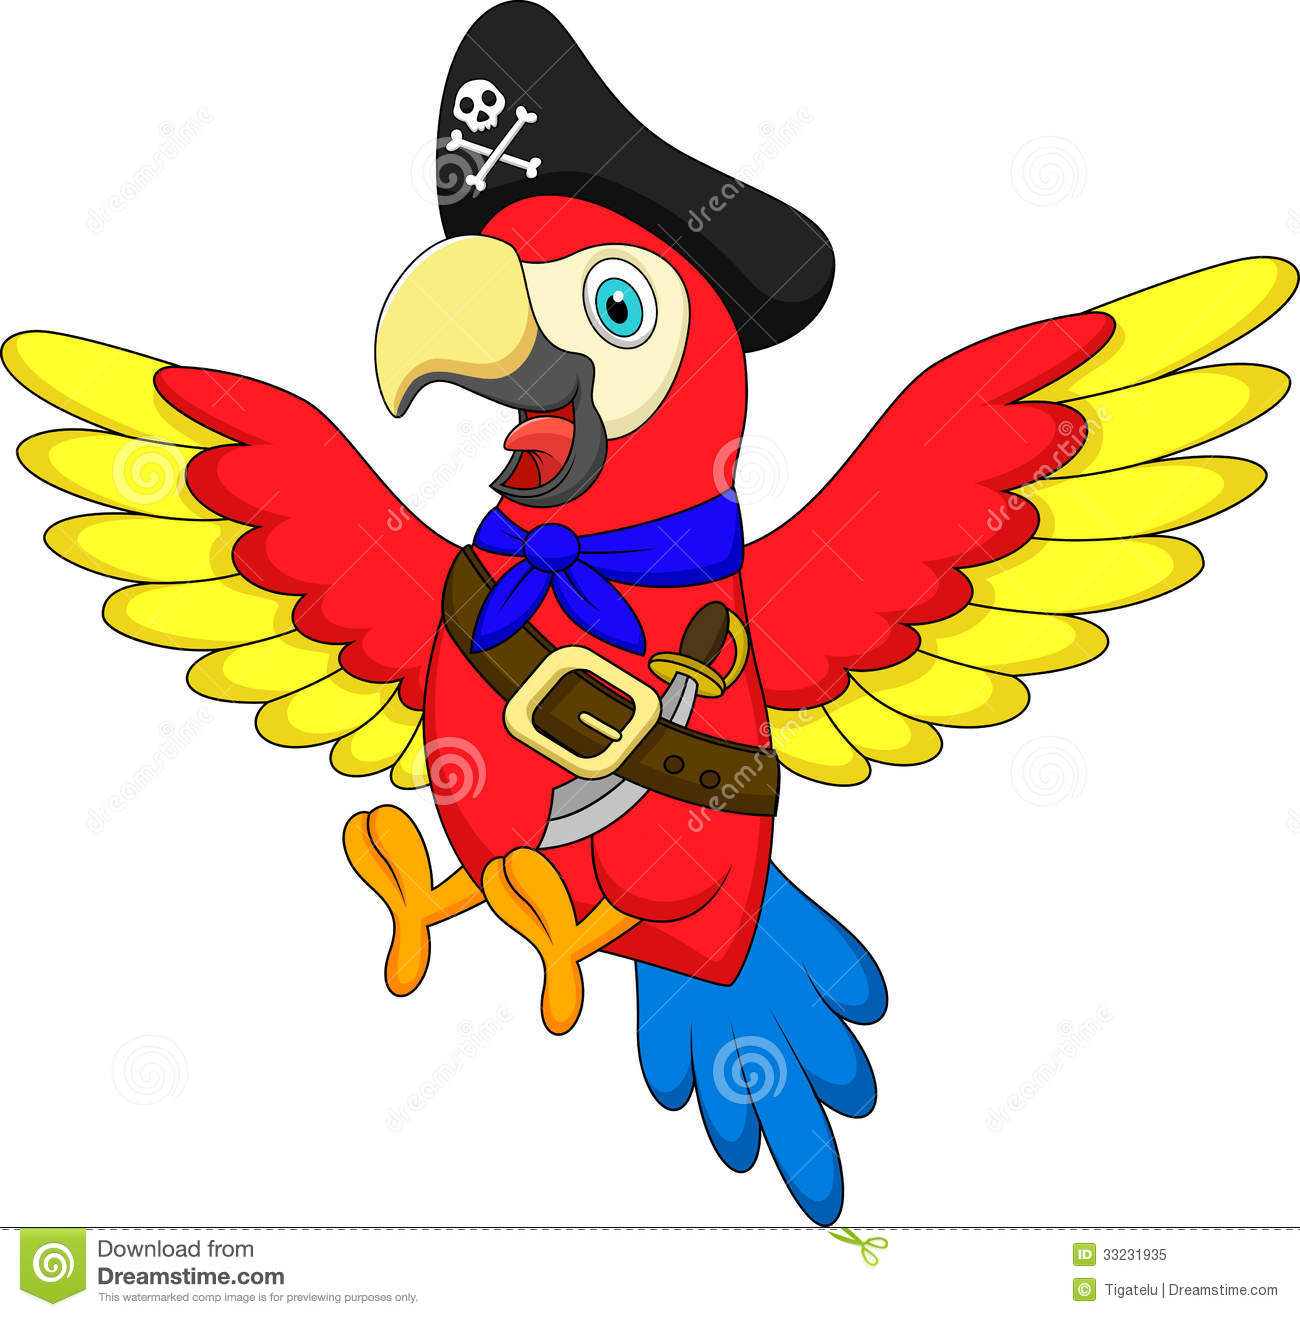 Pirate bird clipart - Clipground